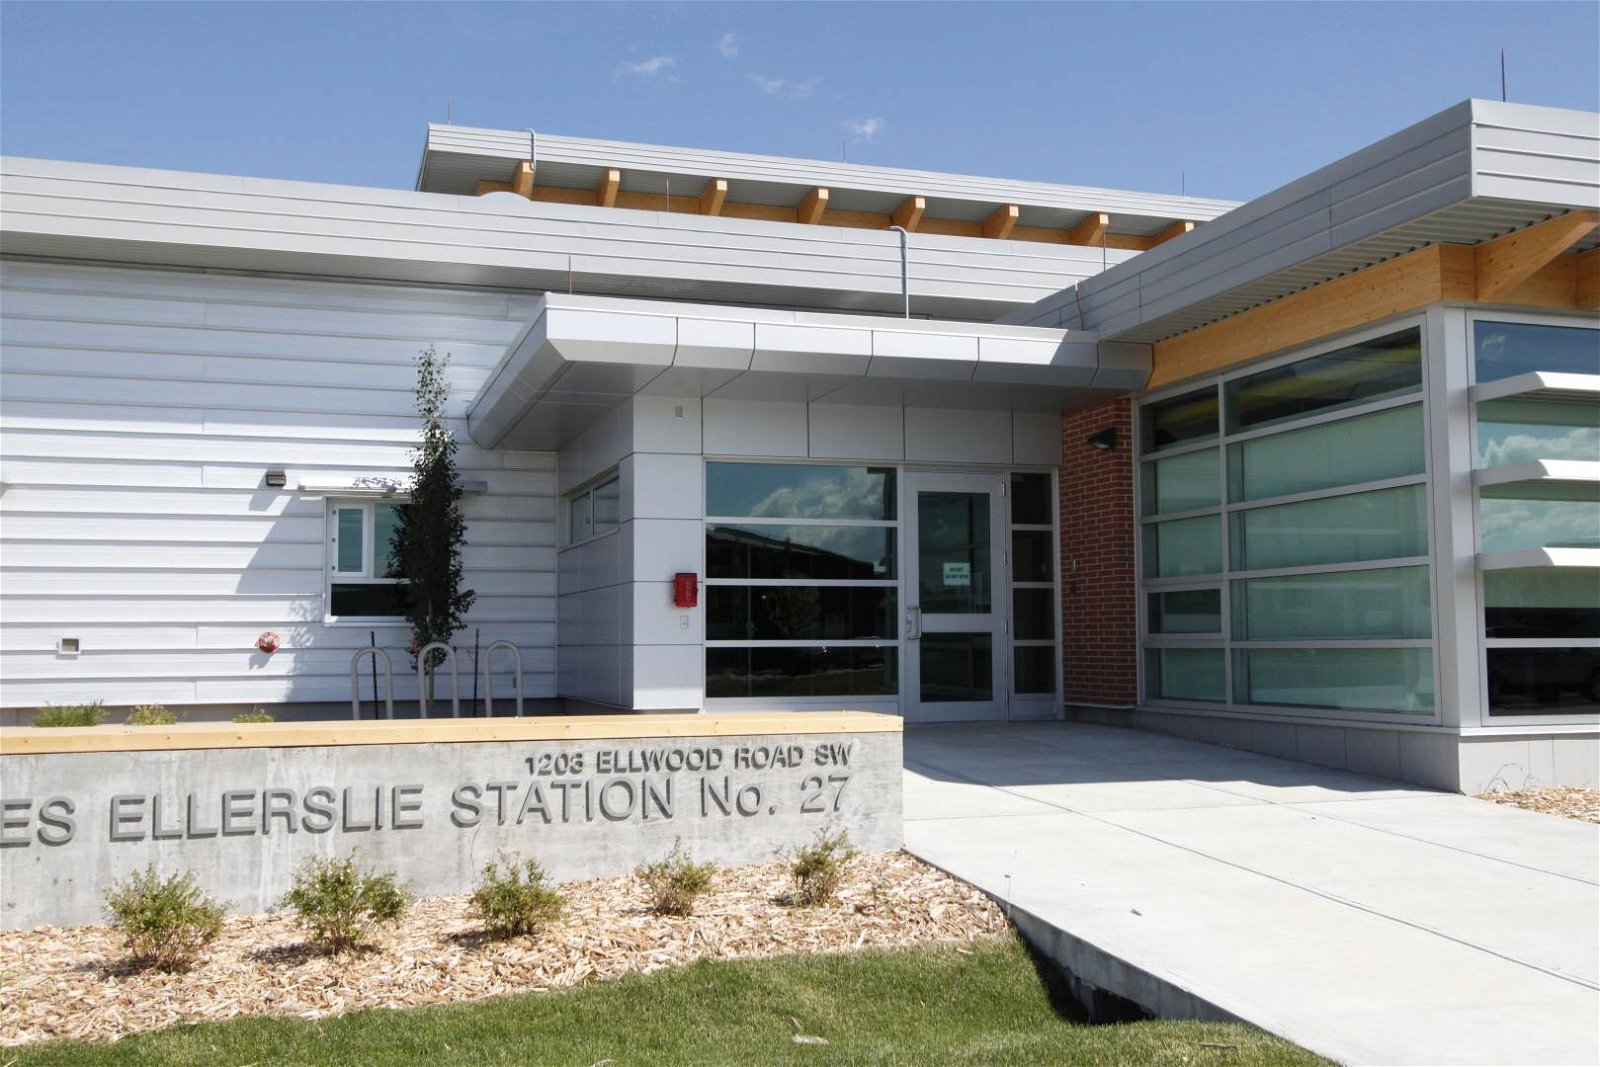 Edmonton Fire Station No. 27